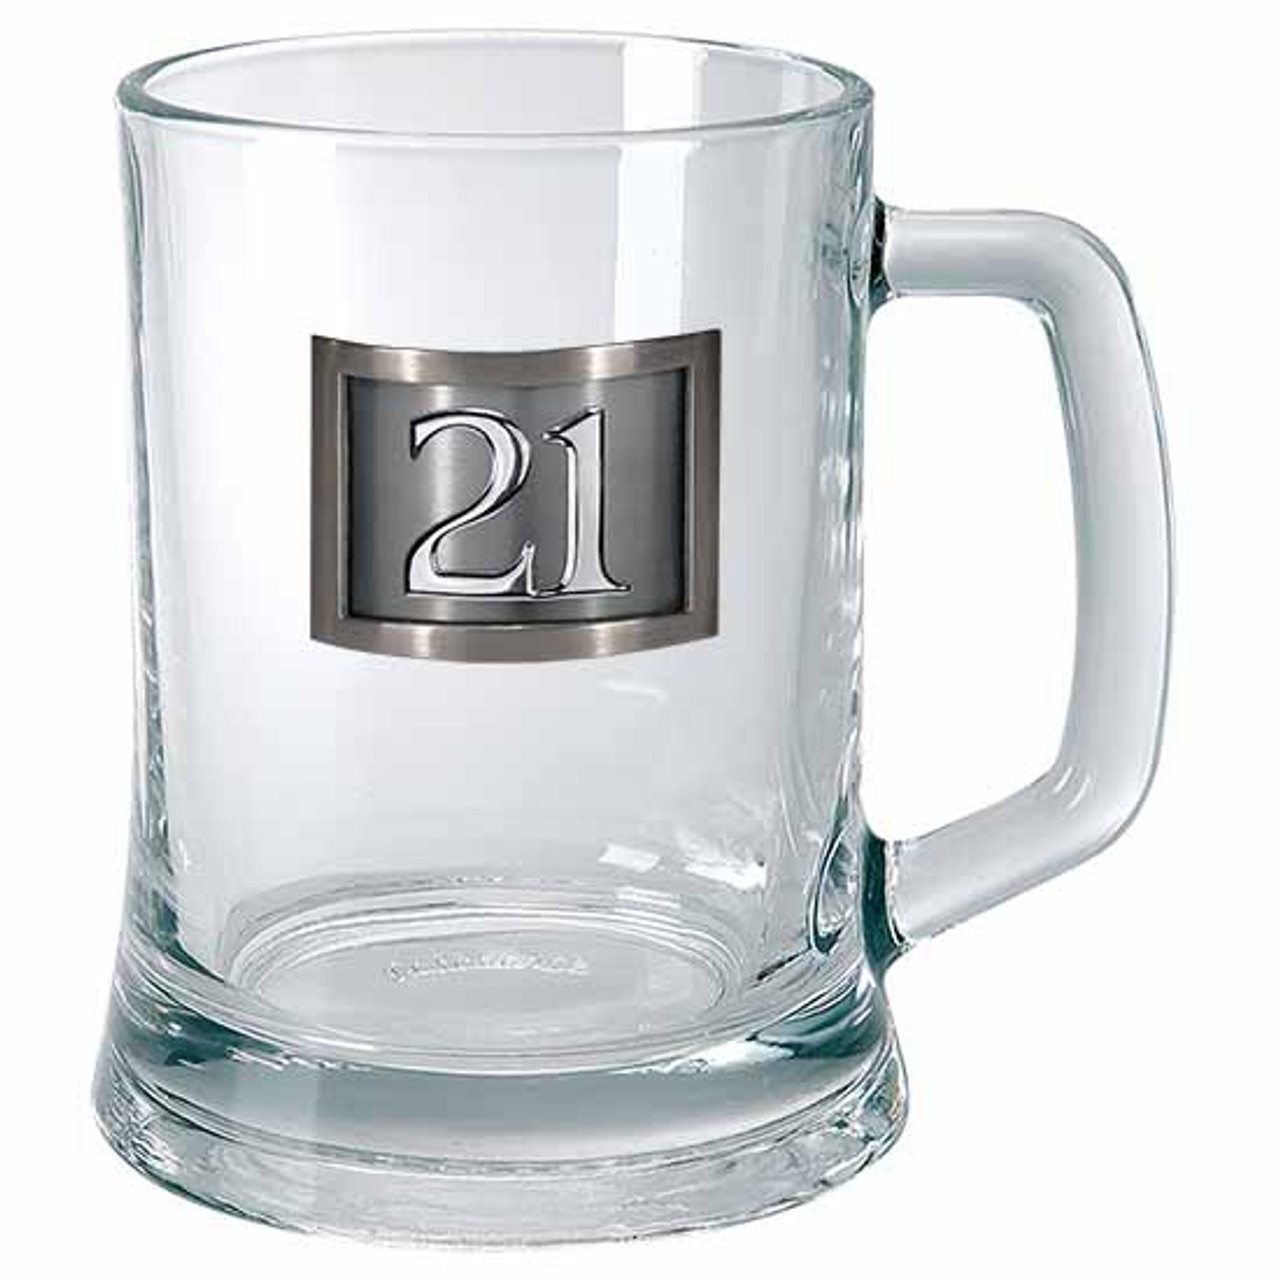 Personalized Beer Mug 12oz / Groomsmen / Engraved / Etched Beer Mug With  Handle / Custom Personalized Beer Glass / Set of 4 Mugs 